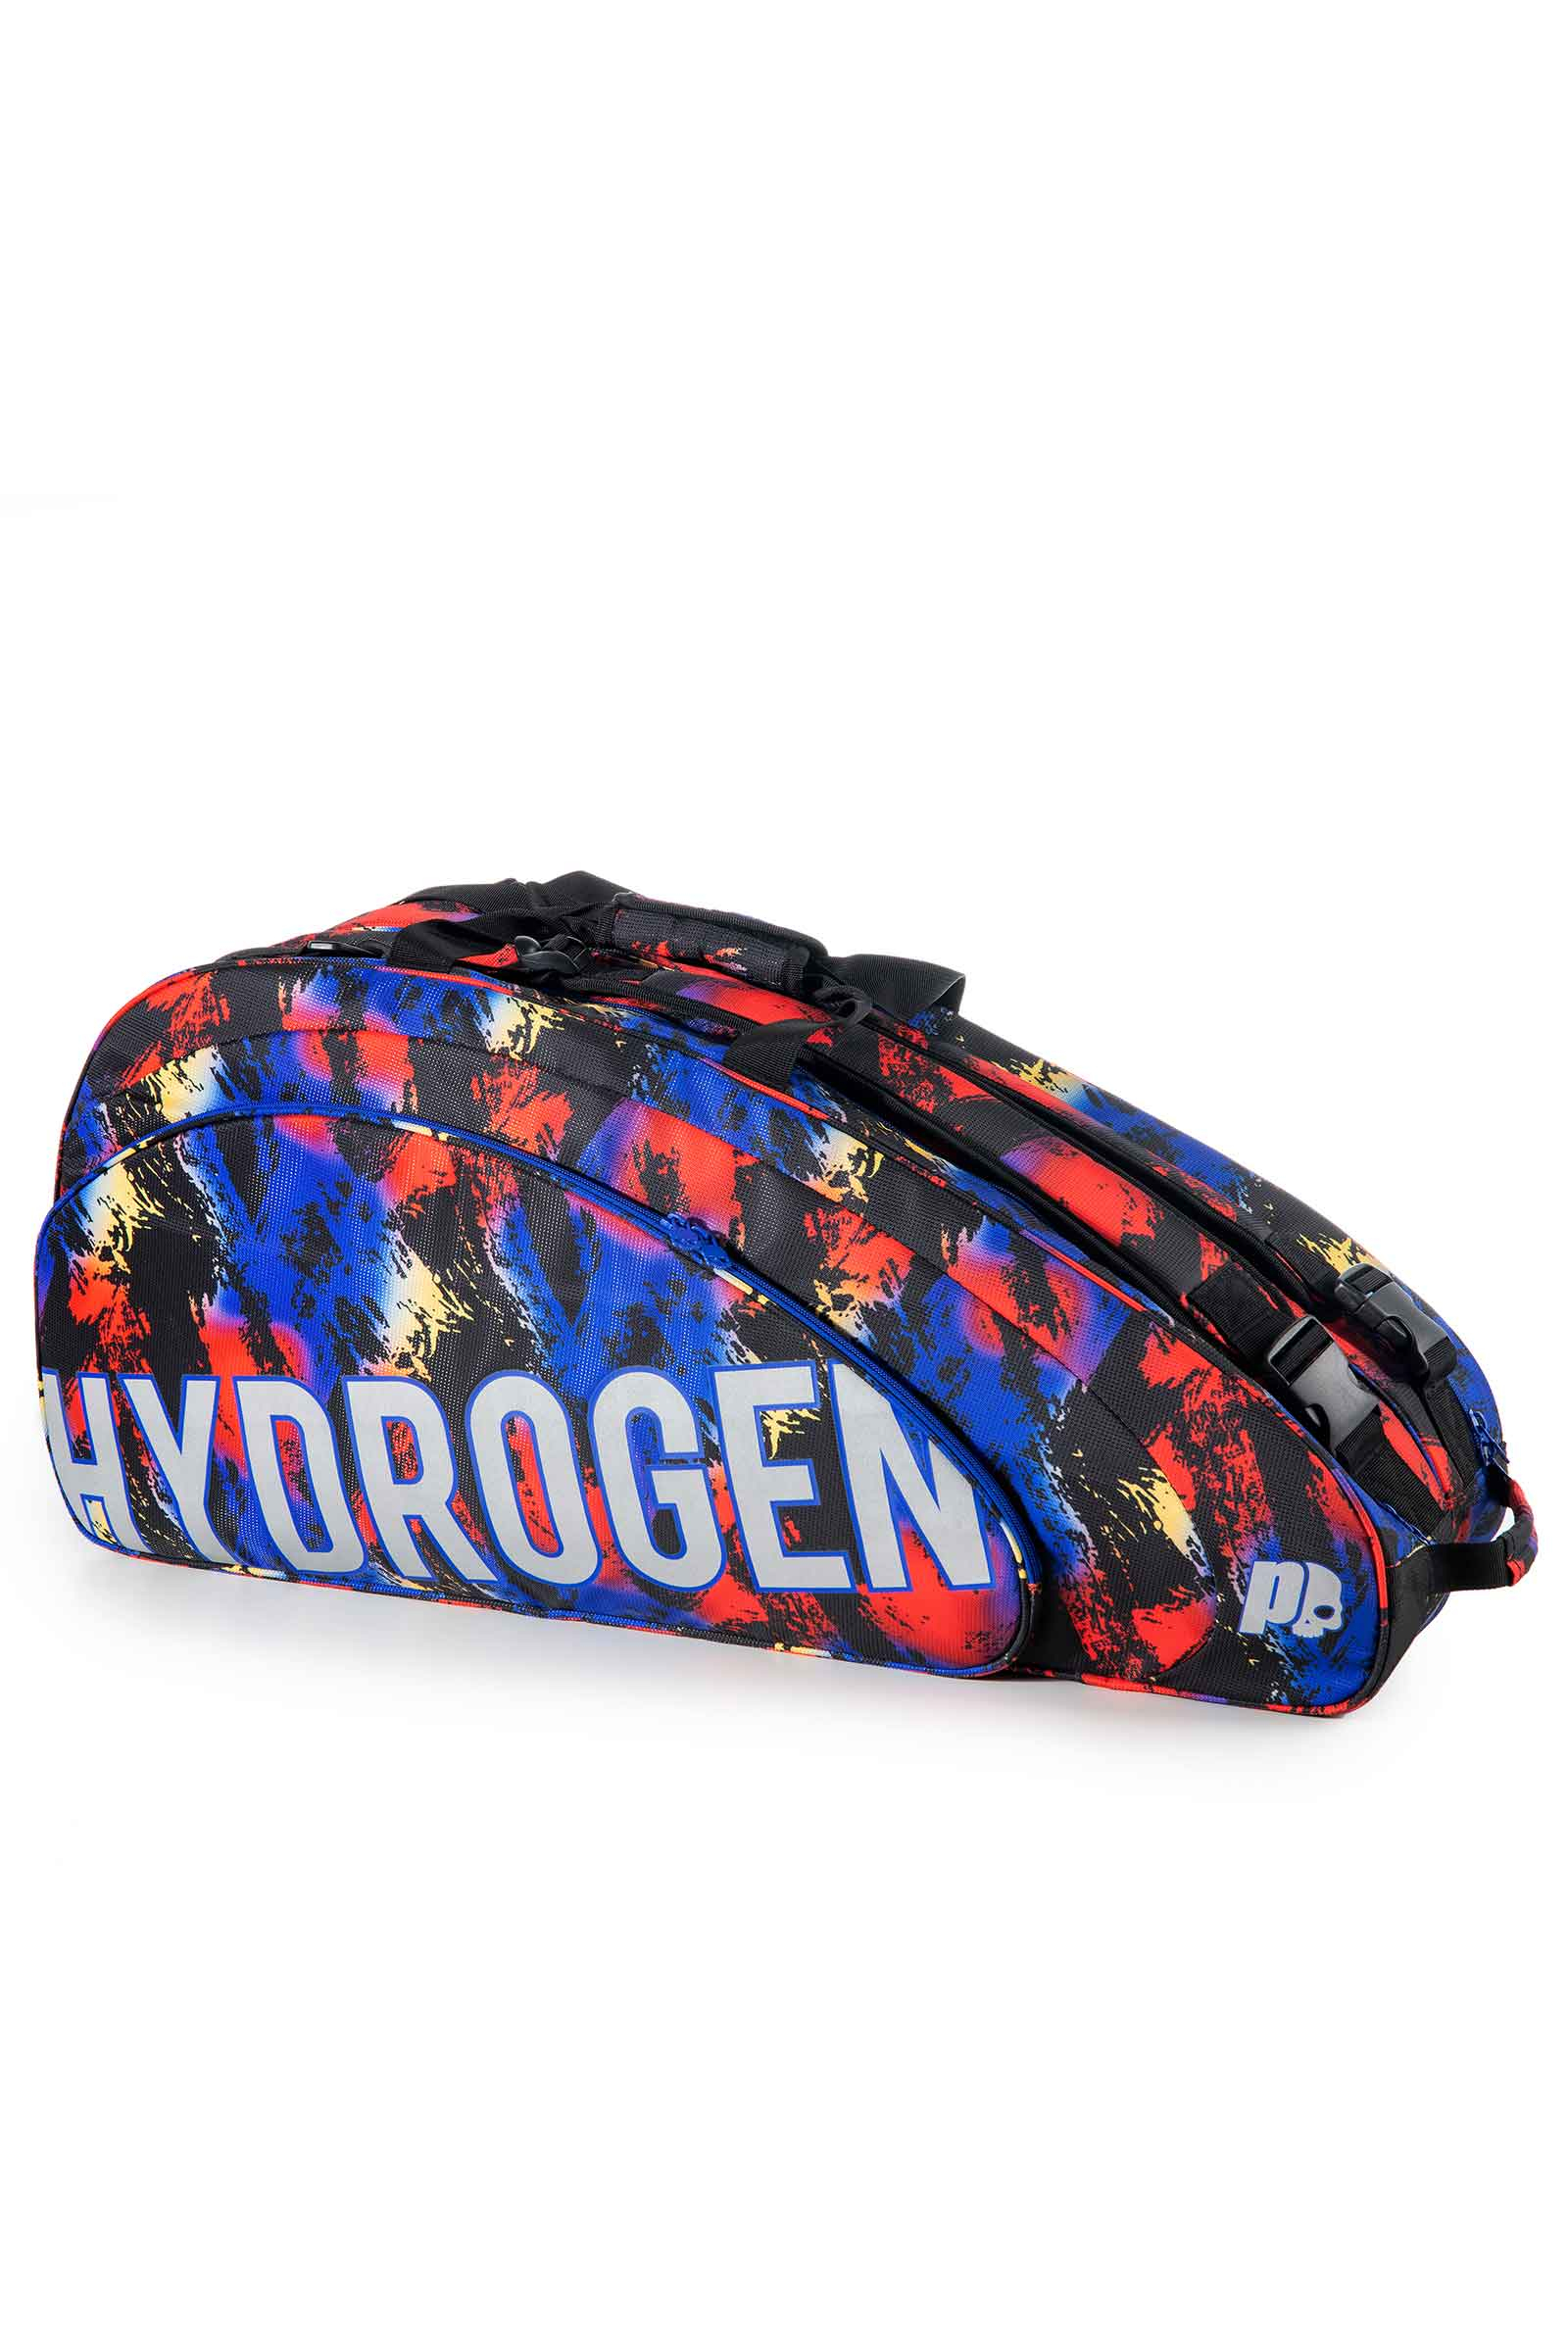 RANDOM  9 RACKETS BAG PRINCE BY HYDROGEN - BLACK,RED,BLUE - Abbigliamento sportivo | Hydrogen